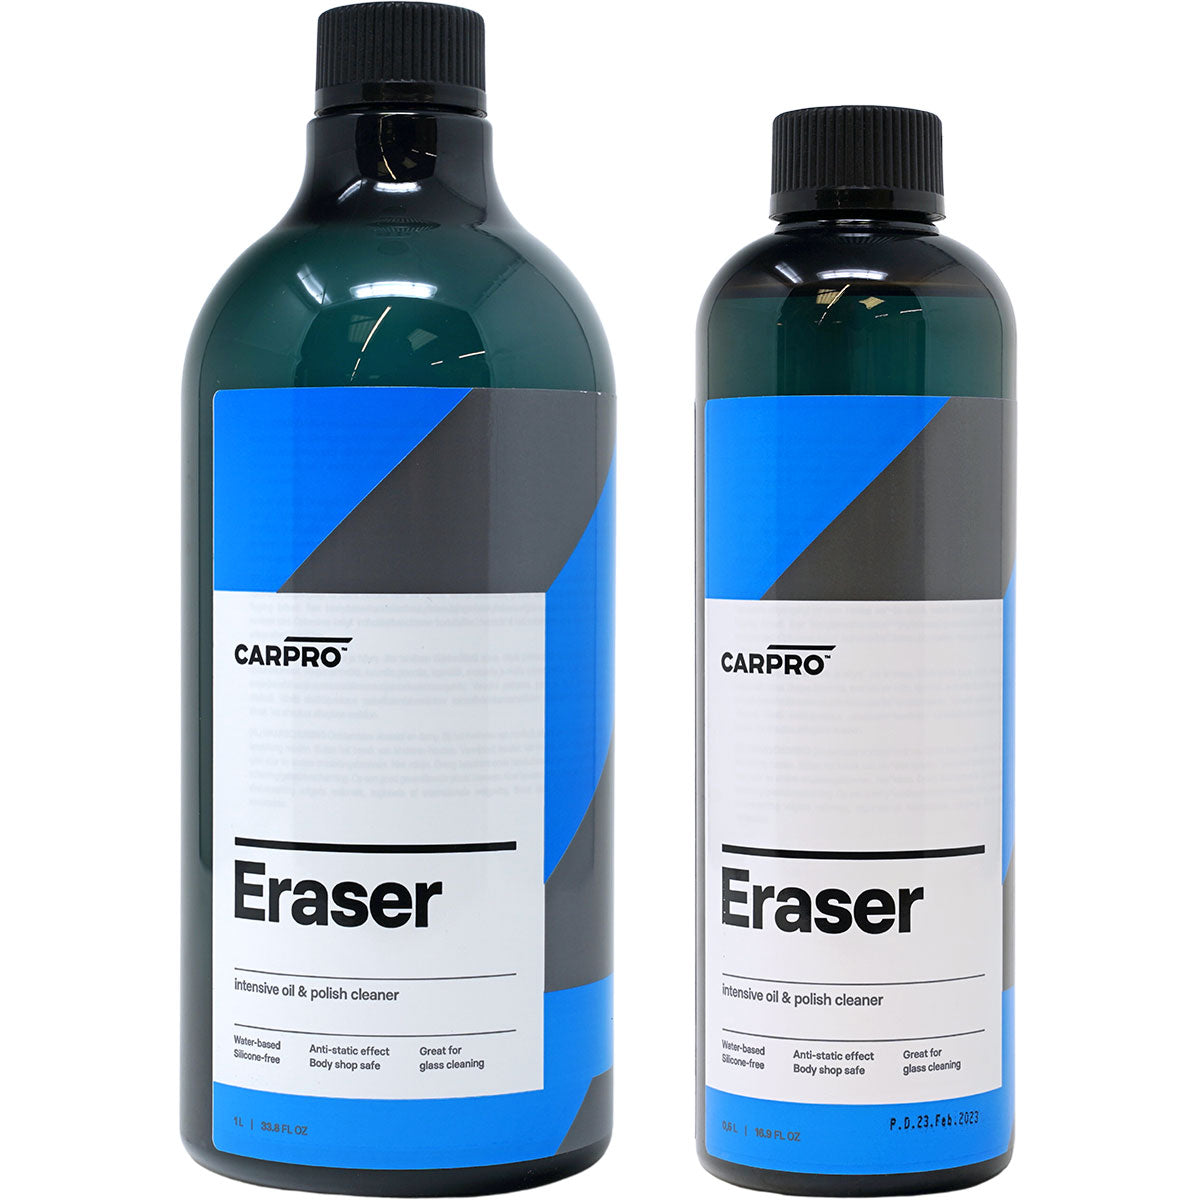 CarPro Eraser - Intense Oil and Polish Cleanser